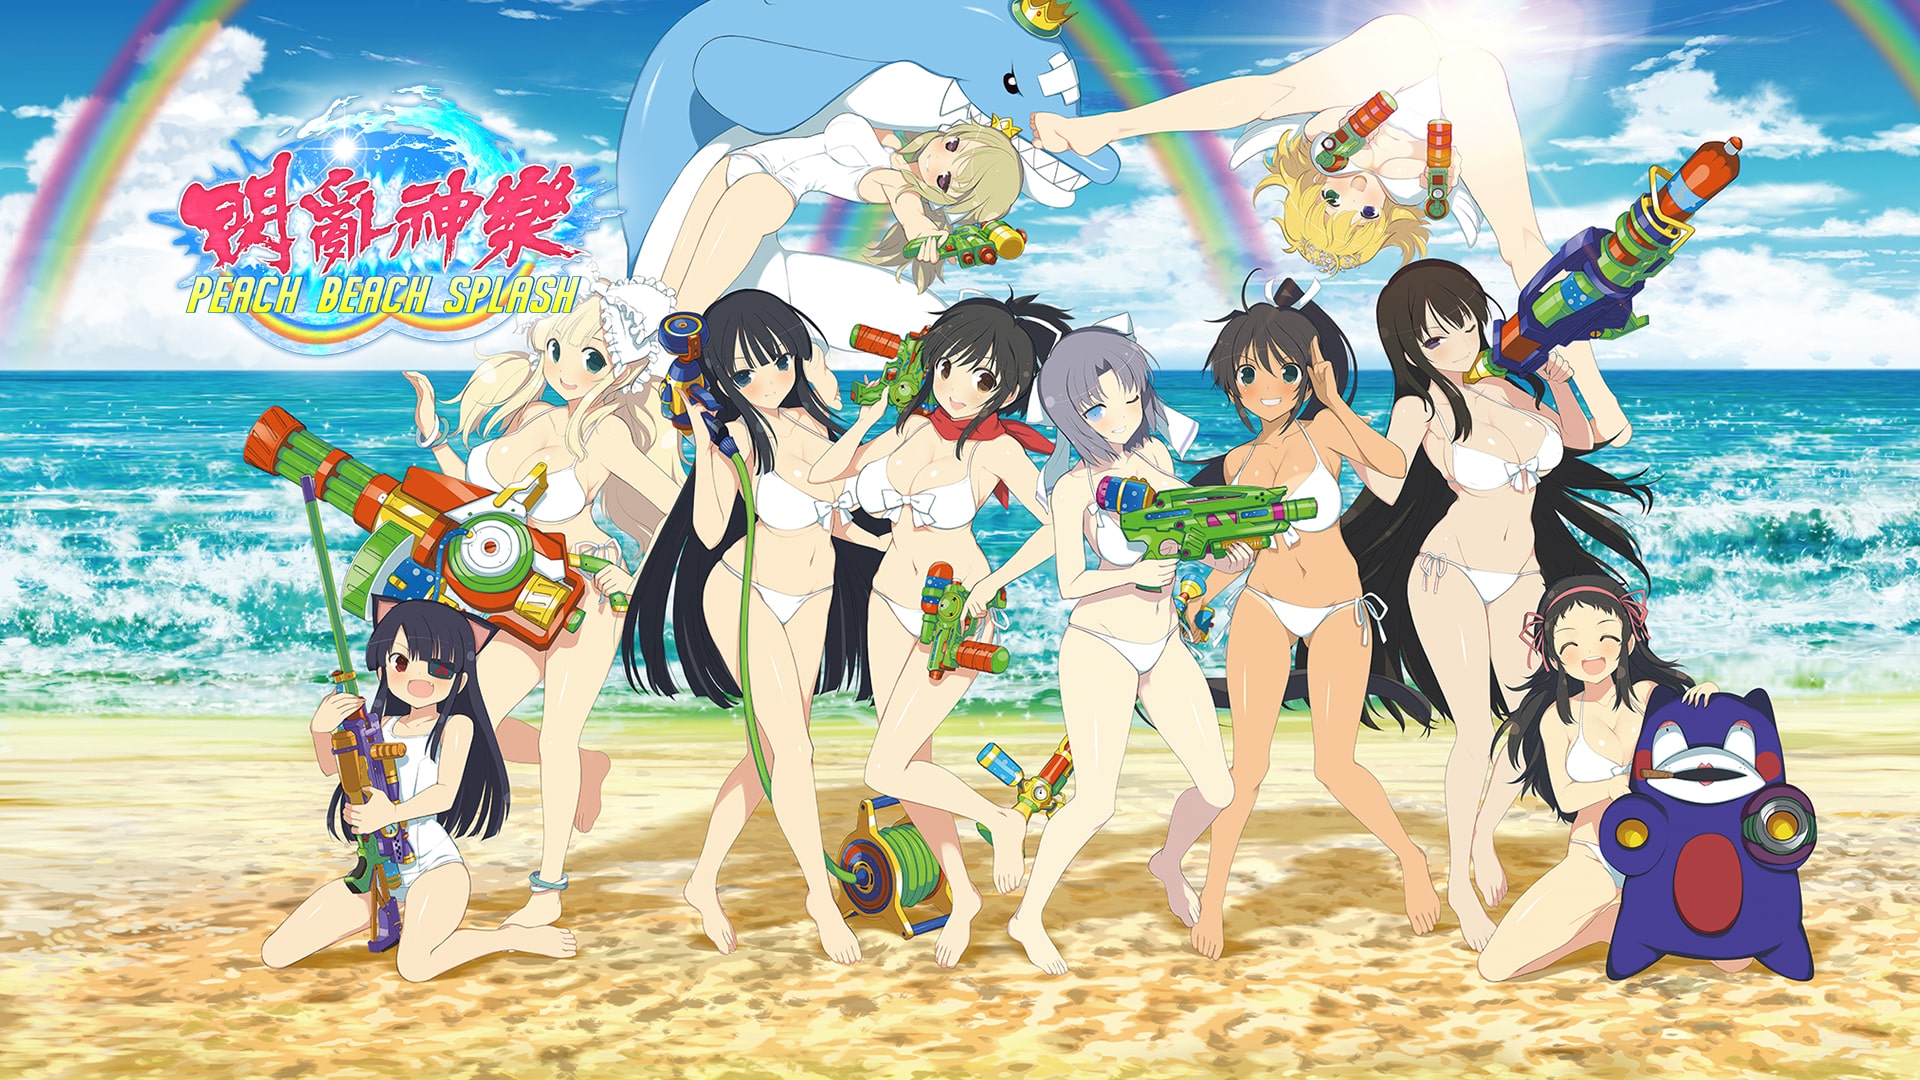 Senran Kagura Peach Beach Splash gets Neptune Character Pack DLC on March 7